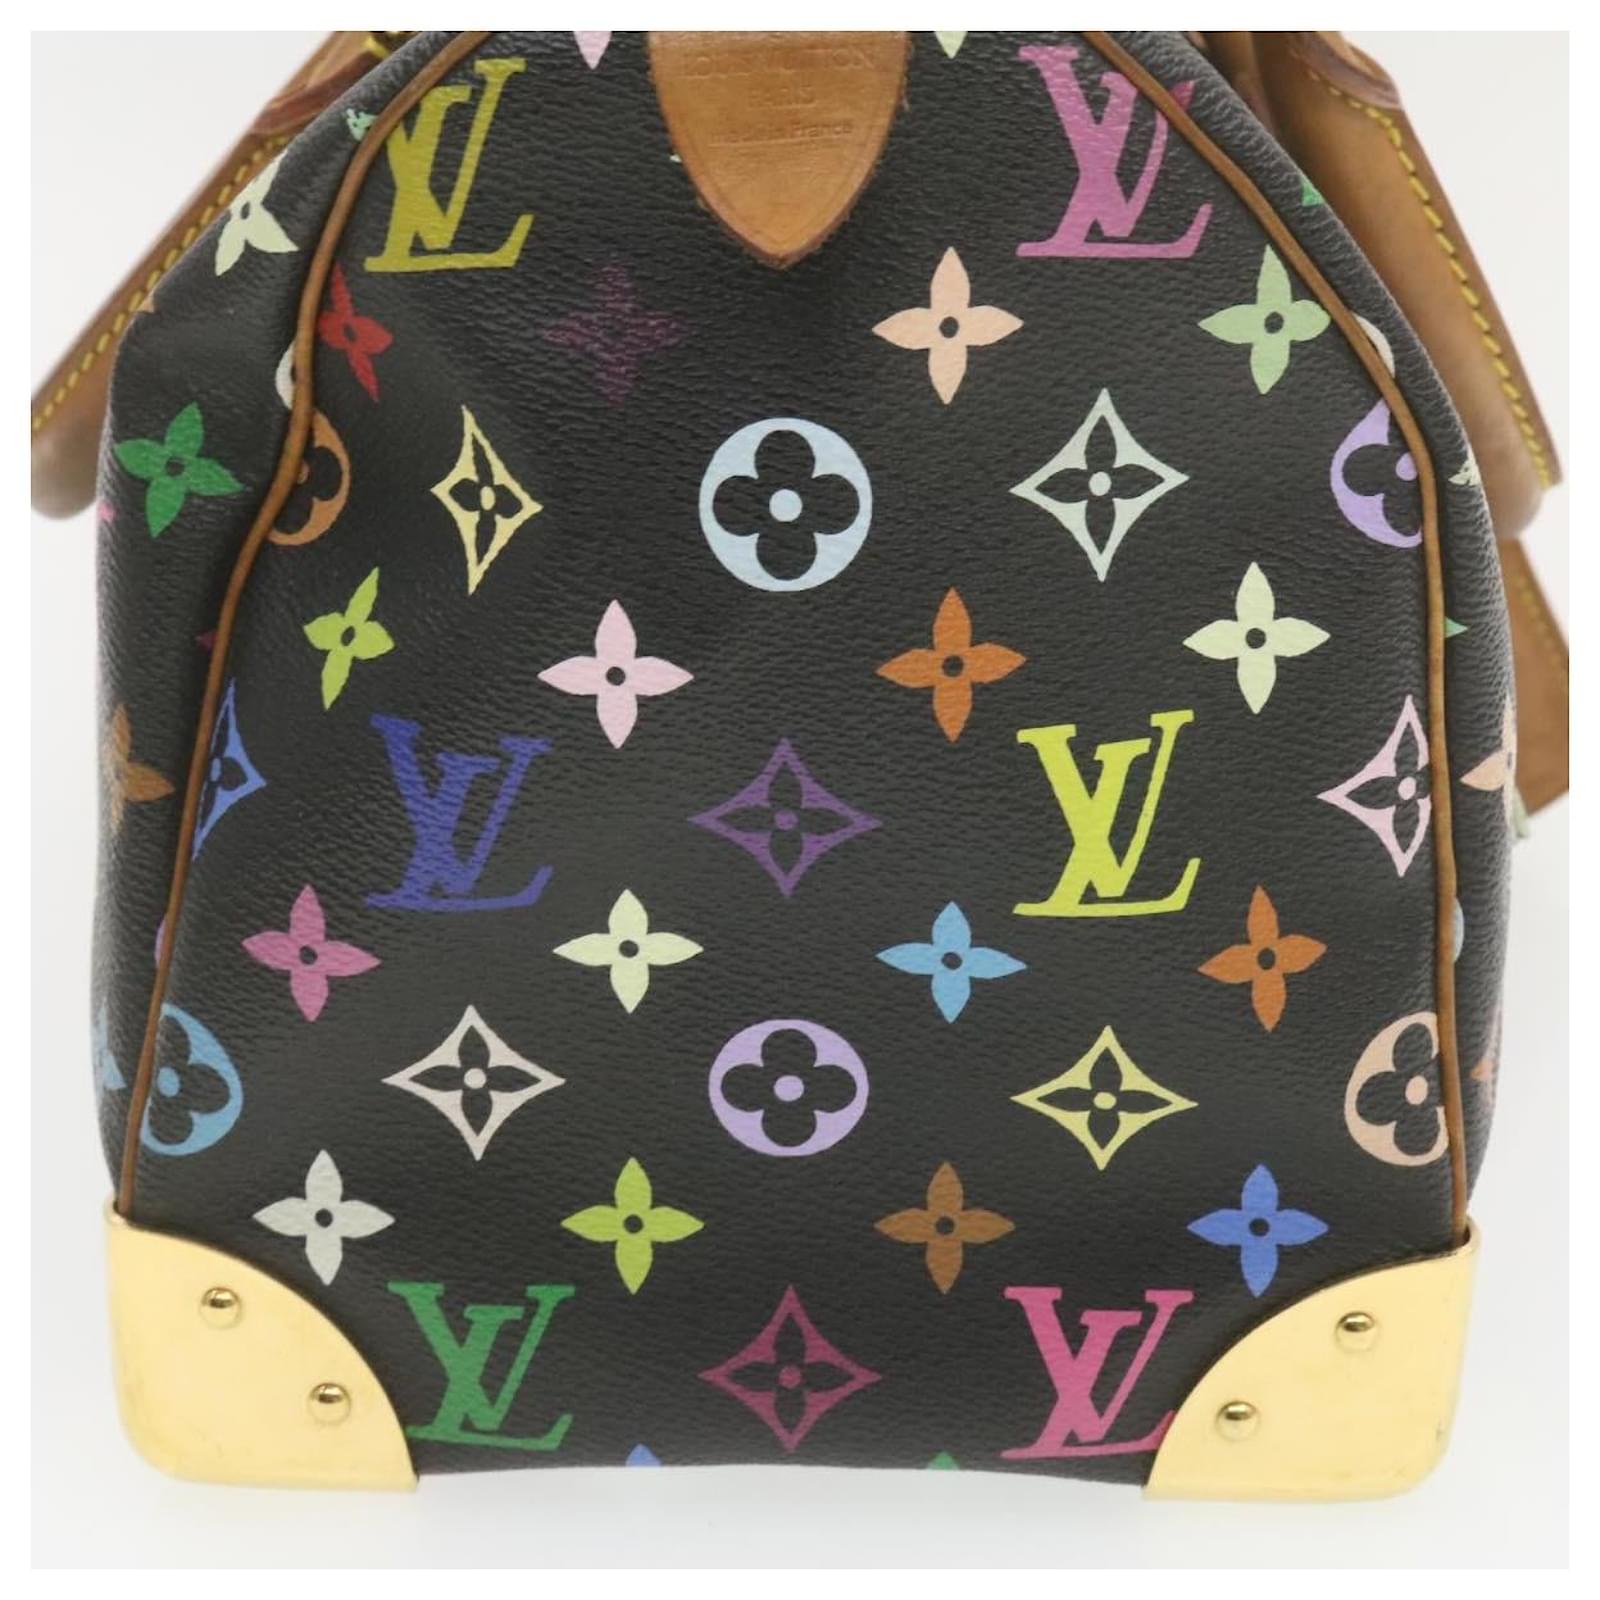 Auth Louis Vuitton Monogram Multi color Black Speedy 30 Hand Bag